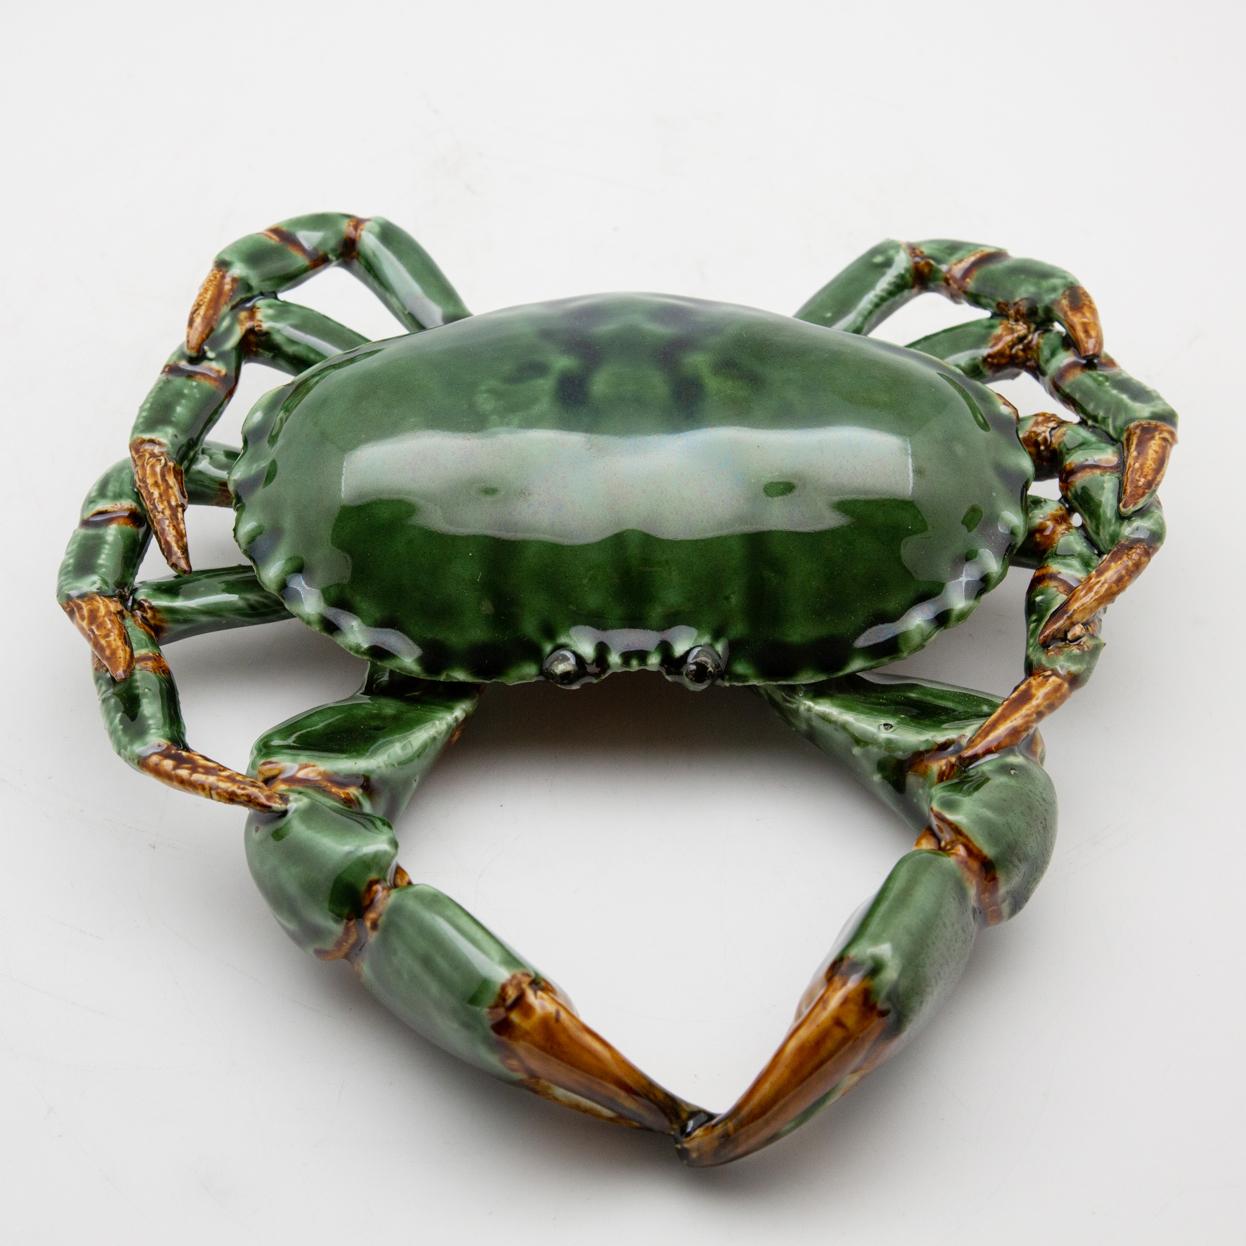 Portuguese Handmade Pallissy or Majollica Green Ceramic Crab 4